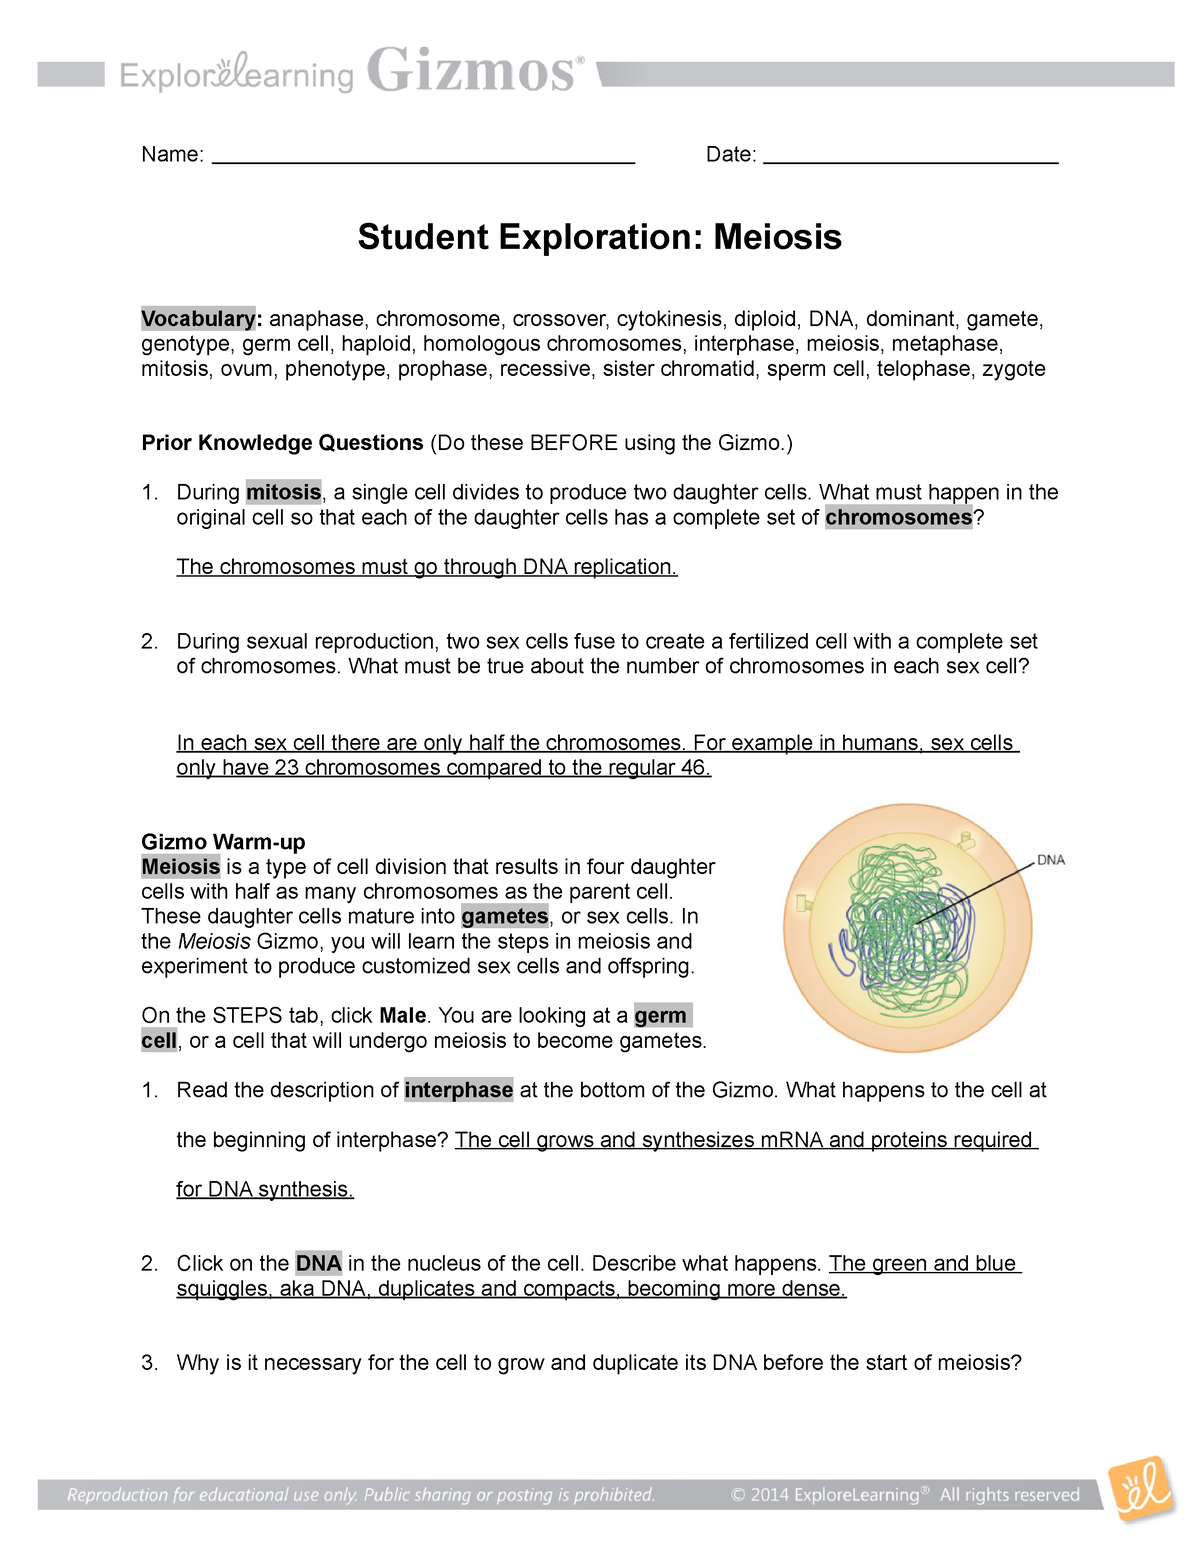 Student Exploration Meiosis Worksheet Answers